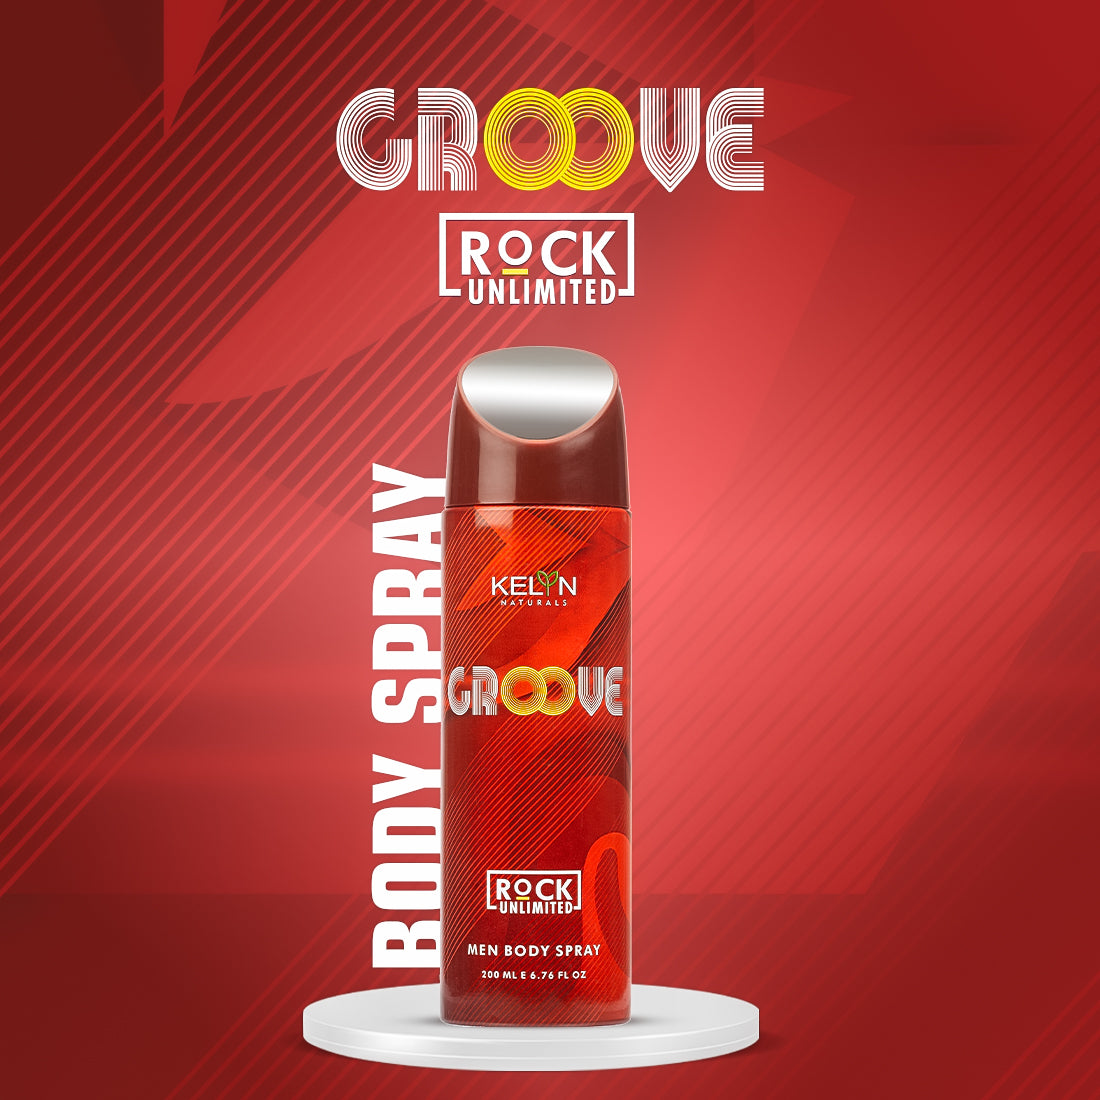 Groove Deodorant for Men Body Spray, 200 ml